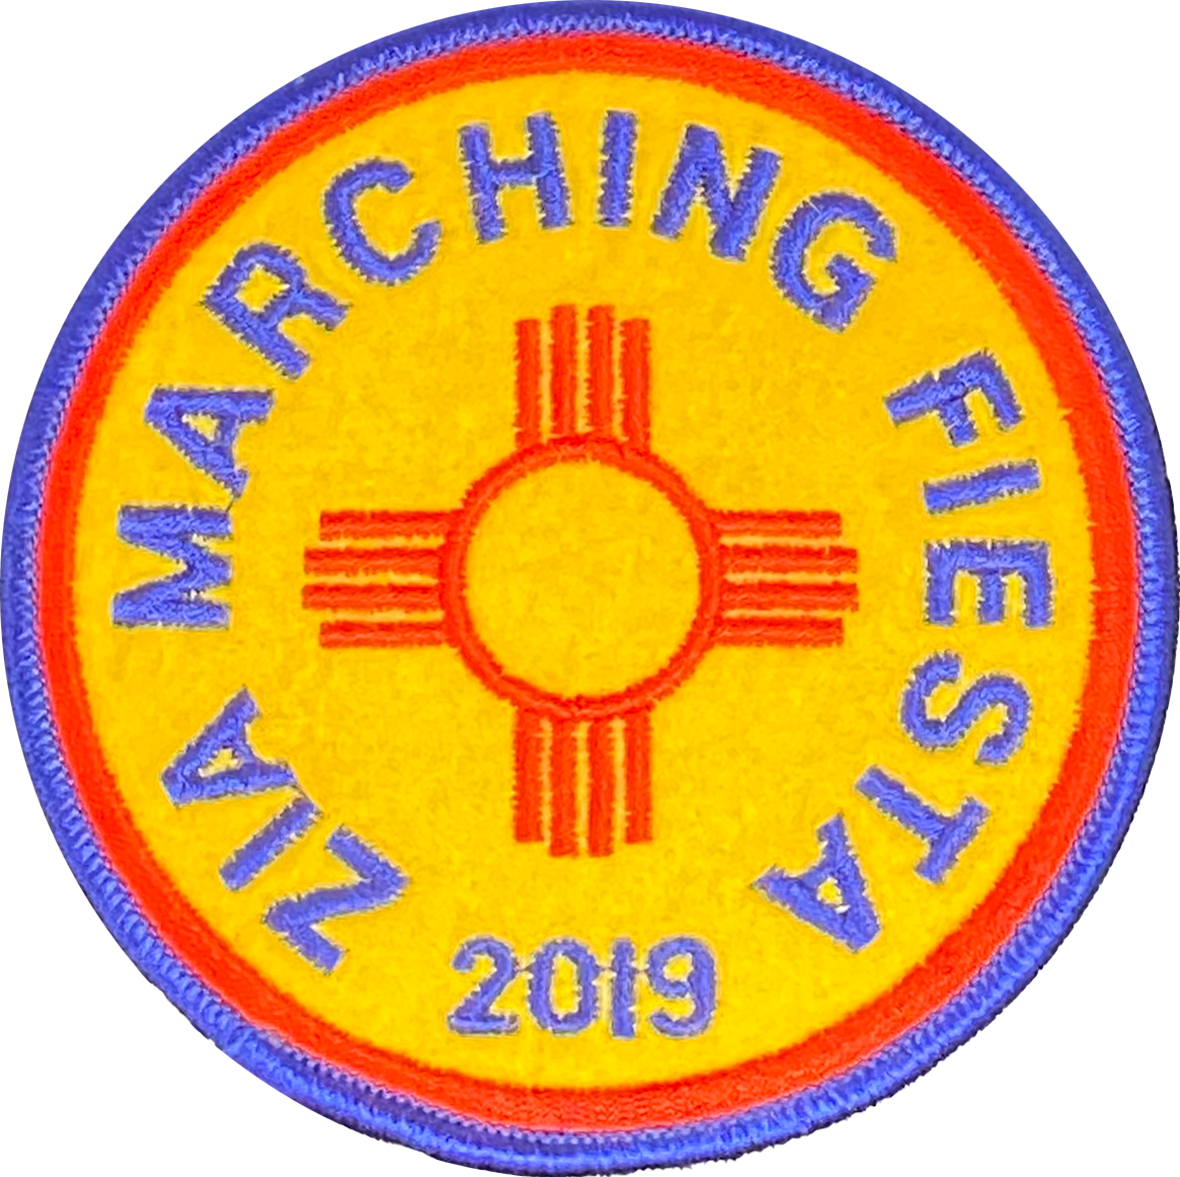 Zia Marching Fiesta 2019 Patch